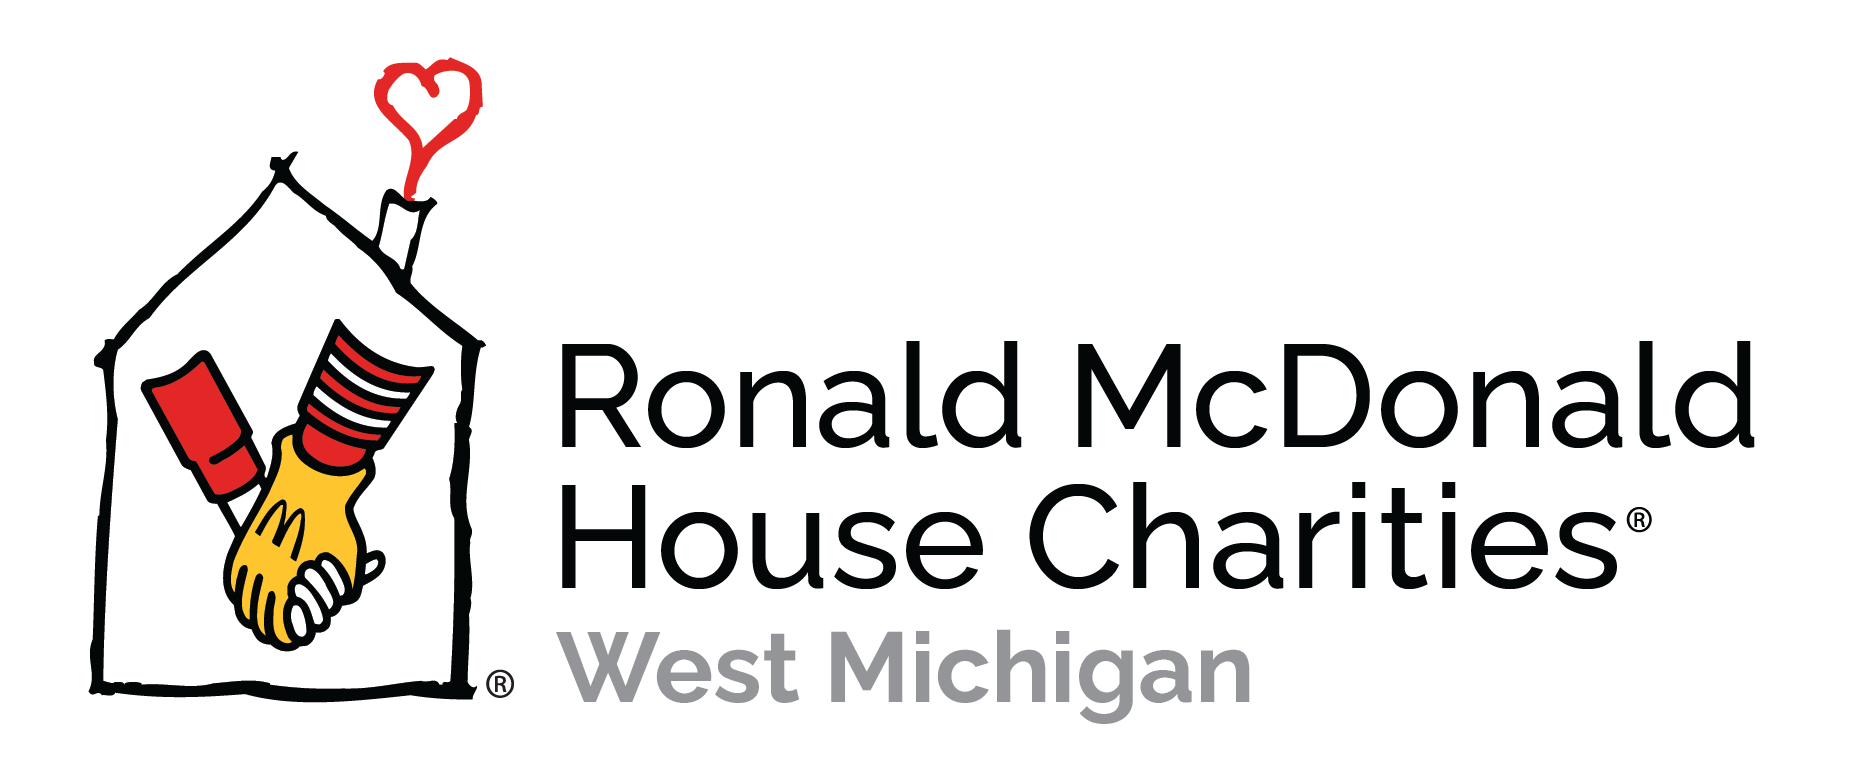 Ronald McDonald House Charities West Michigan